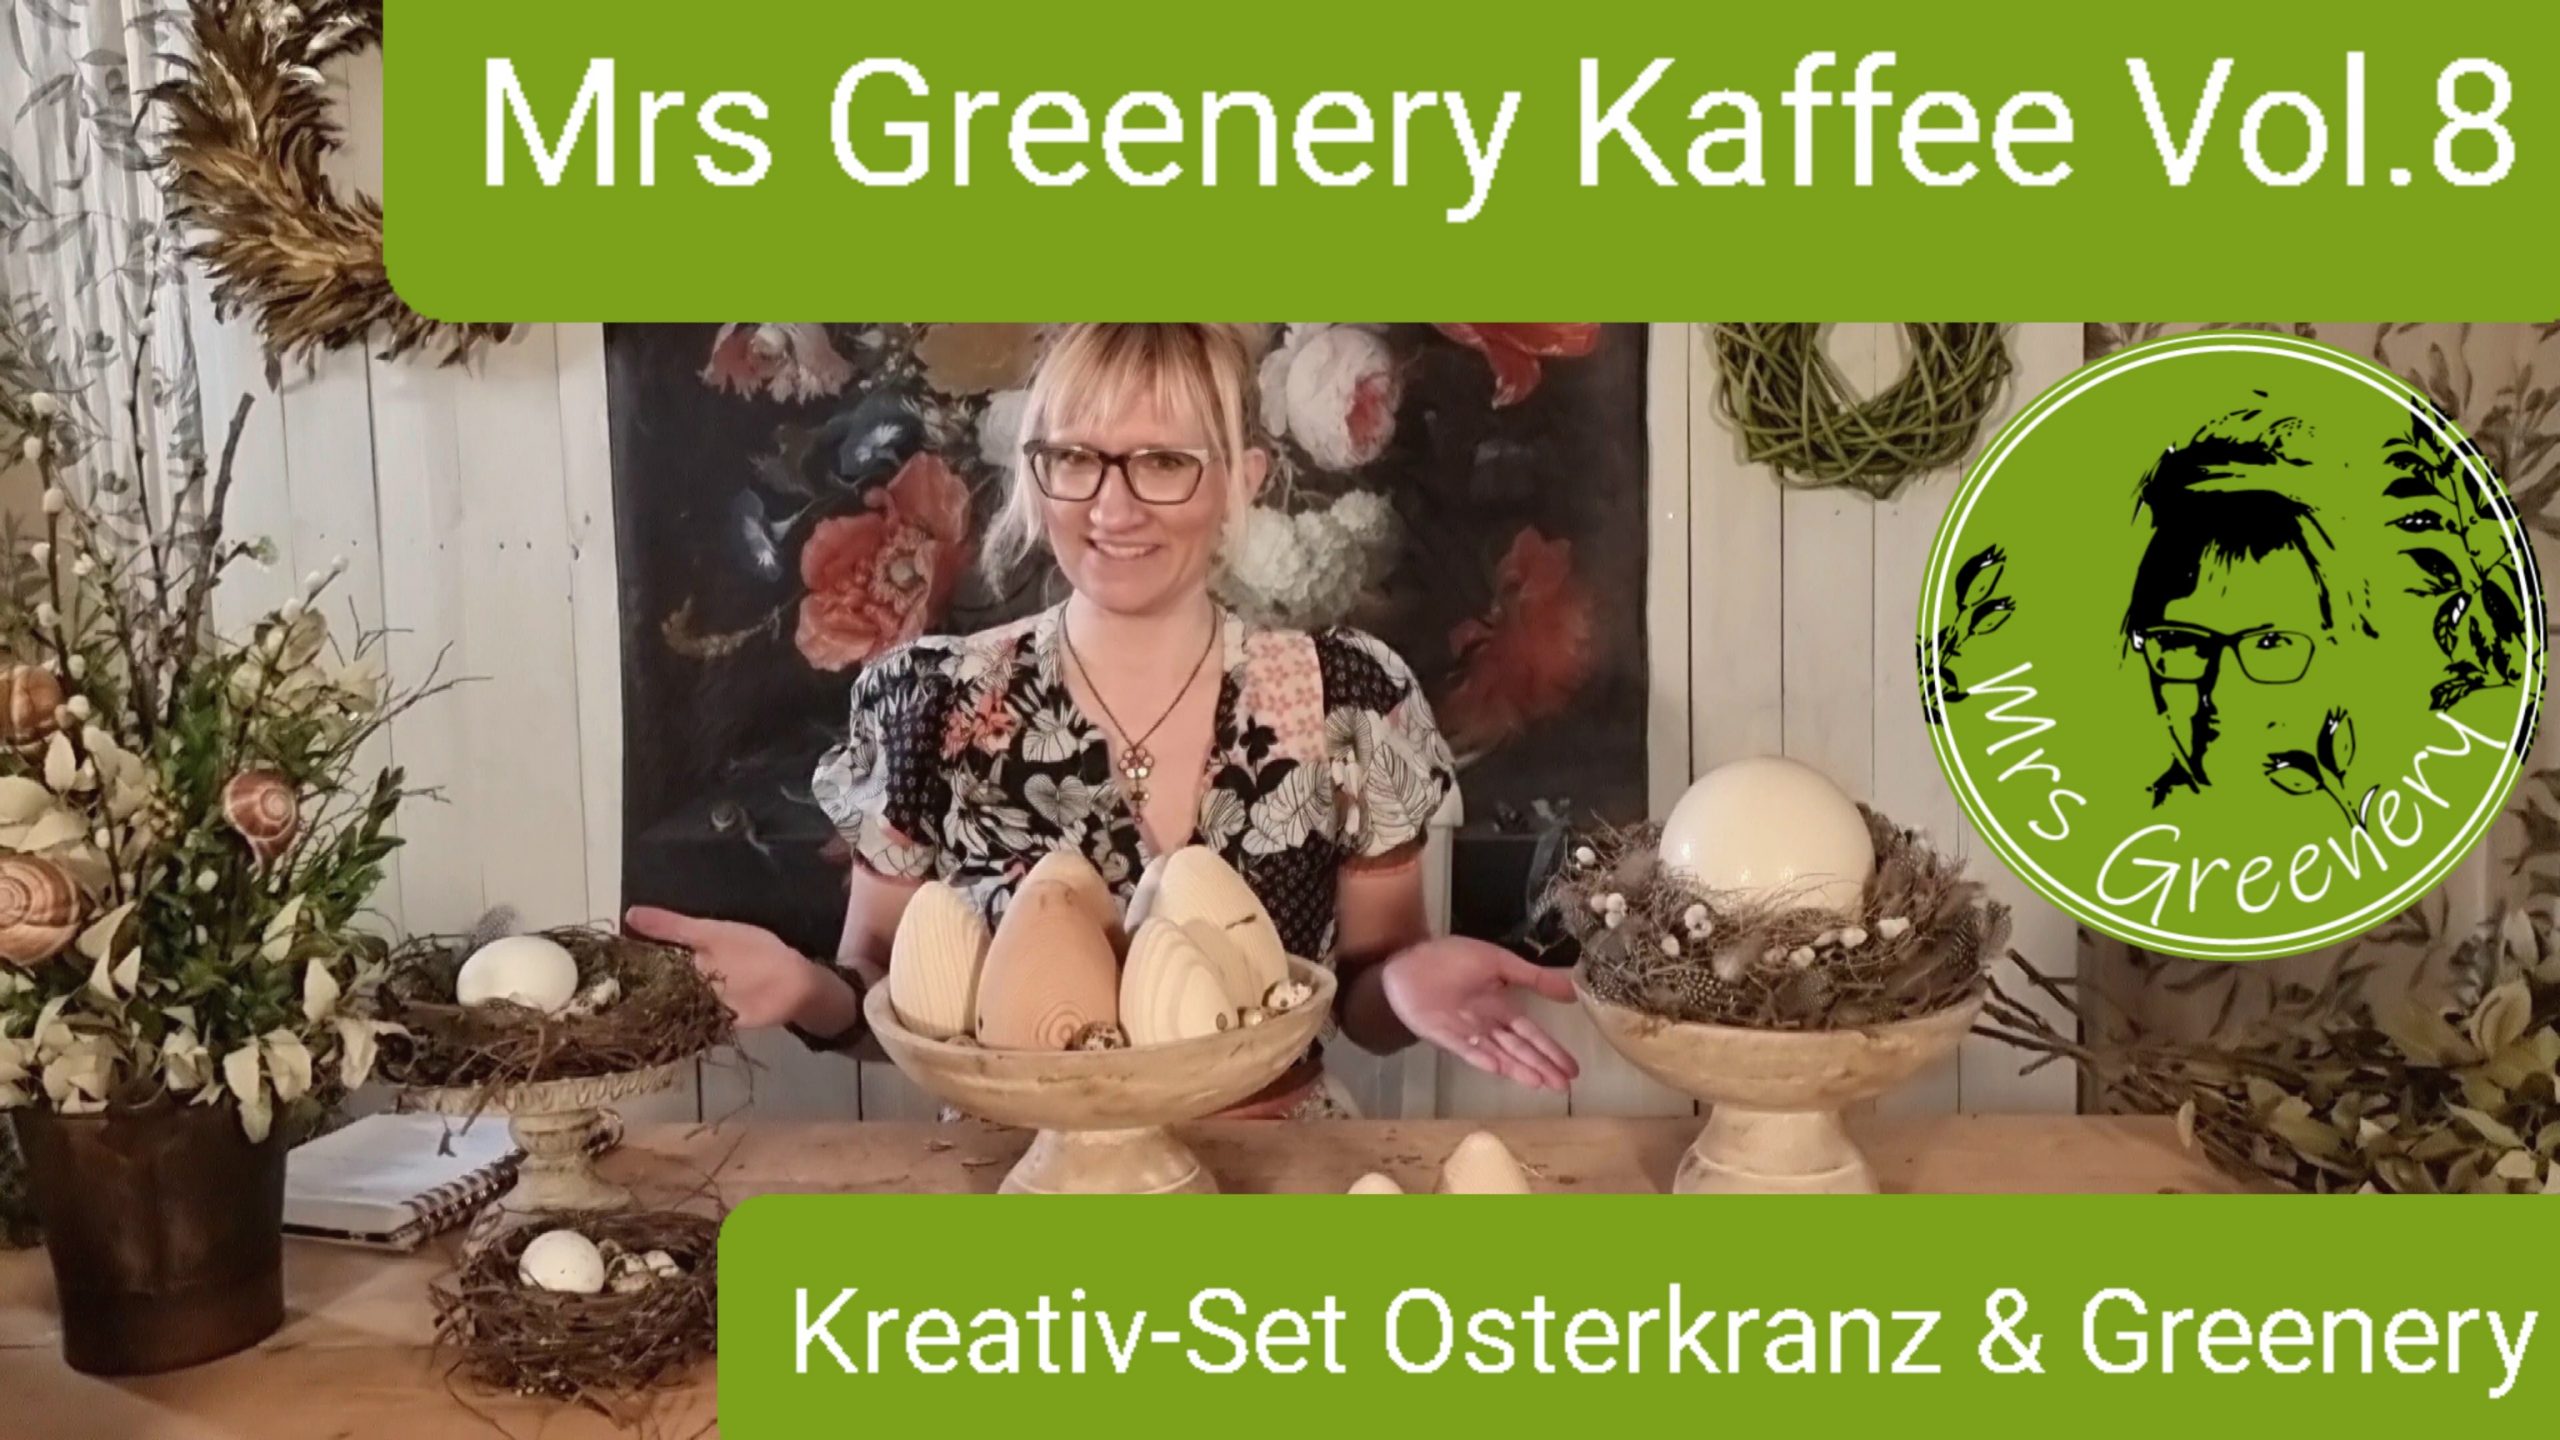 Mrs Greenery Kaffee Vol.8: Kreativ-Set Osterkranz & Greenery für